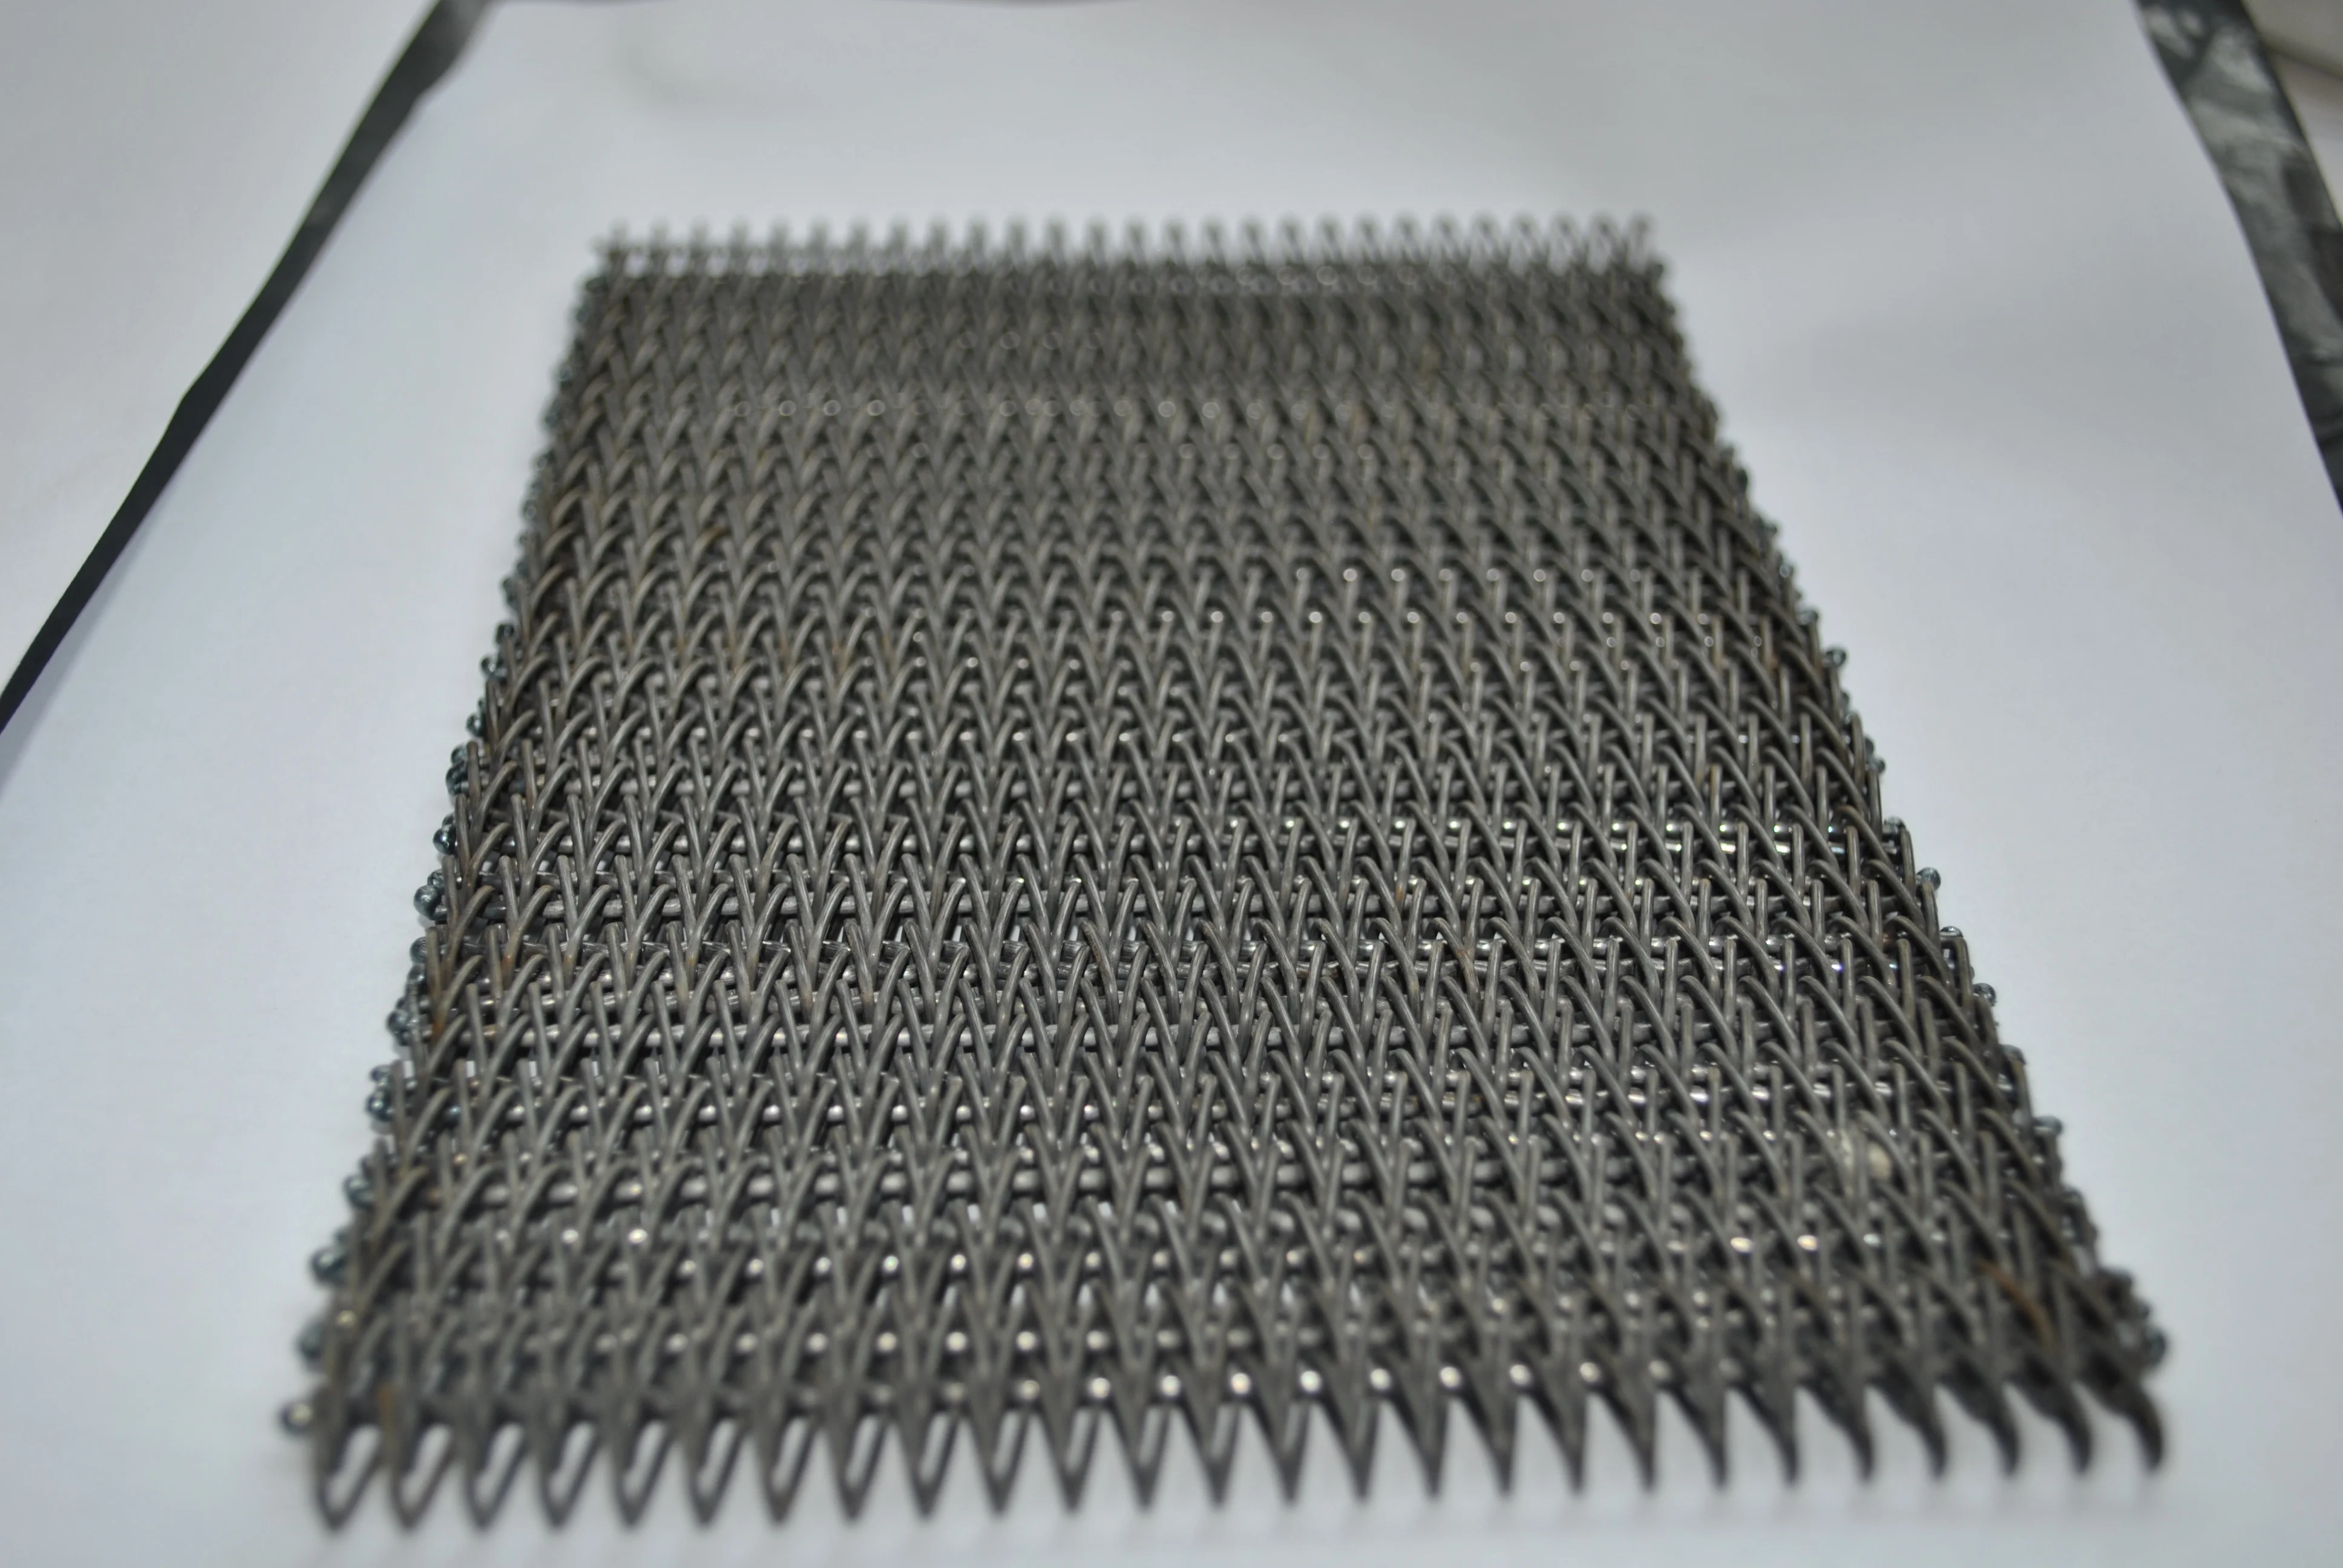 High Temperature Resistant Compound Balanced Wire Mesh conveyor Belt